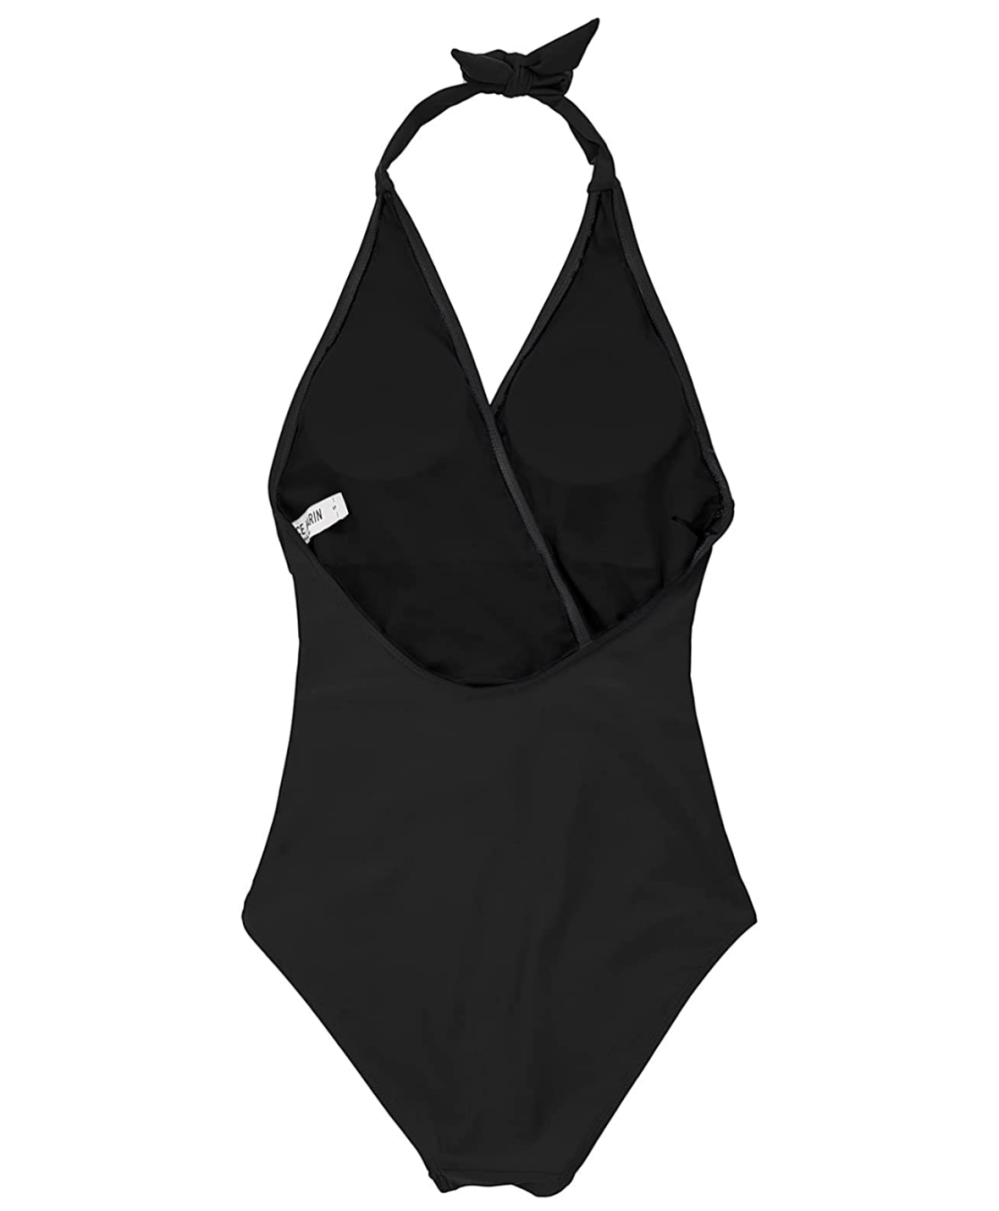 Grace Karin Slimming Swimsuit May Be More Stylish Than a Bikini | UsWeekly